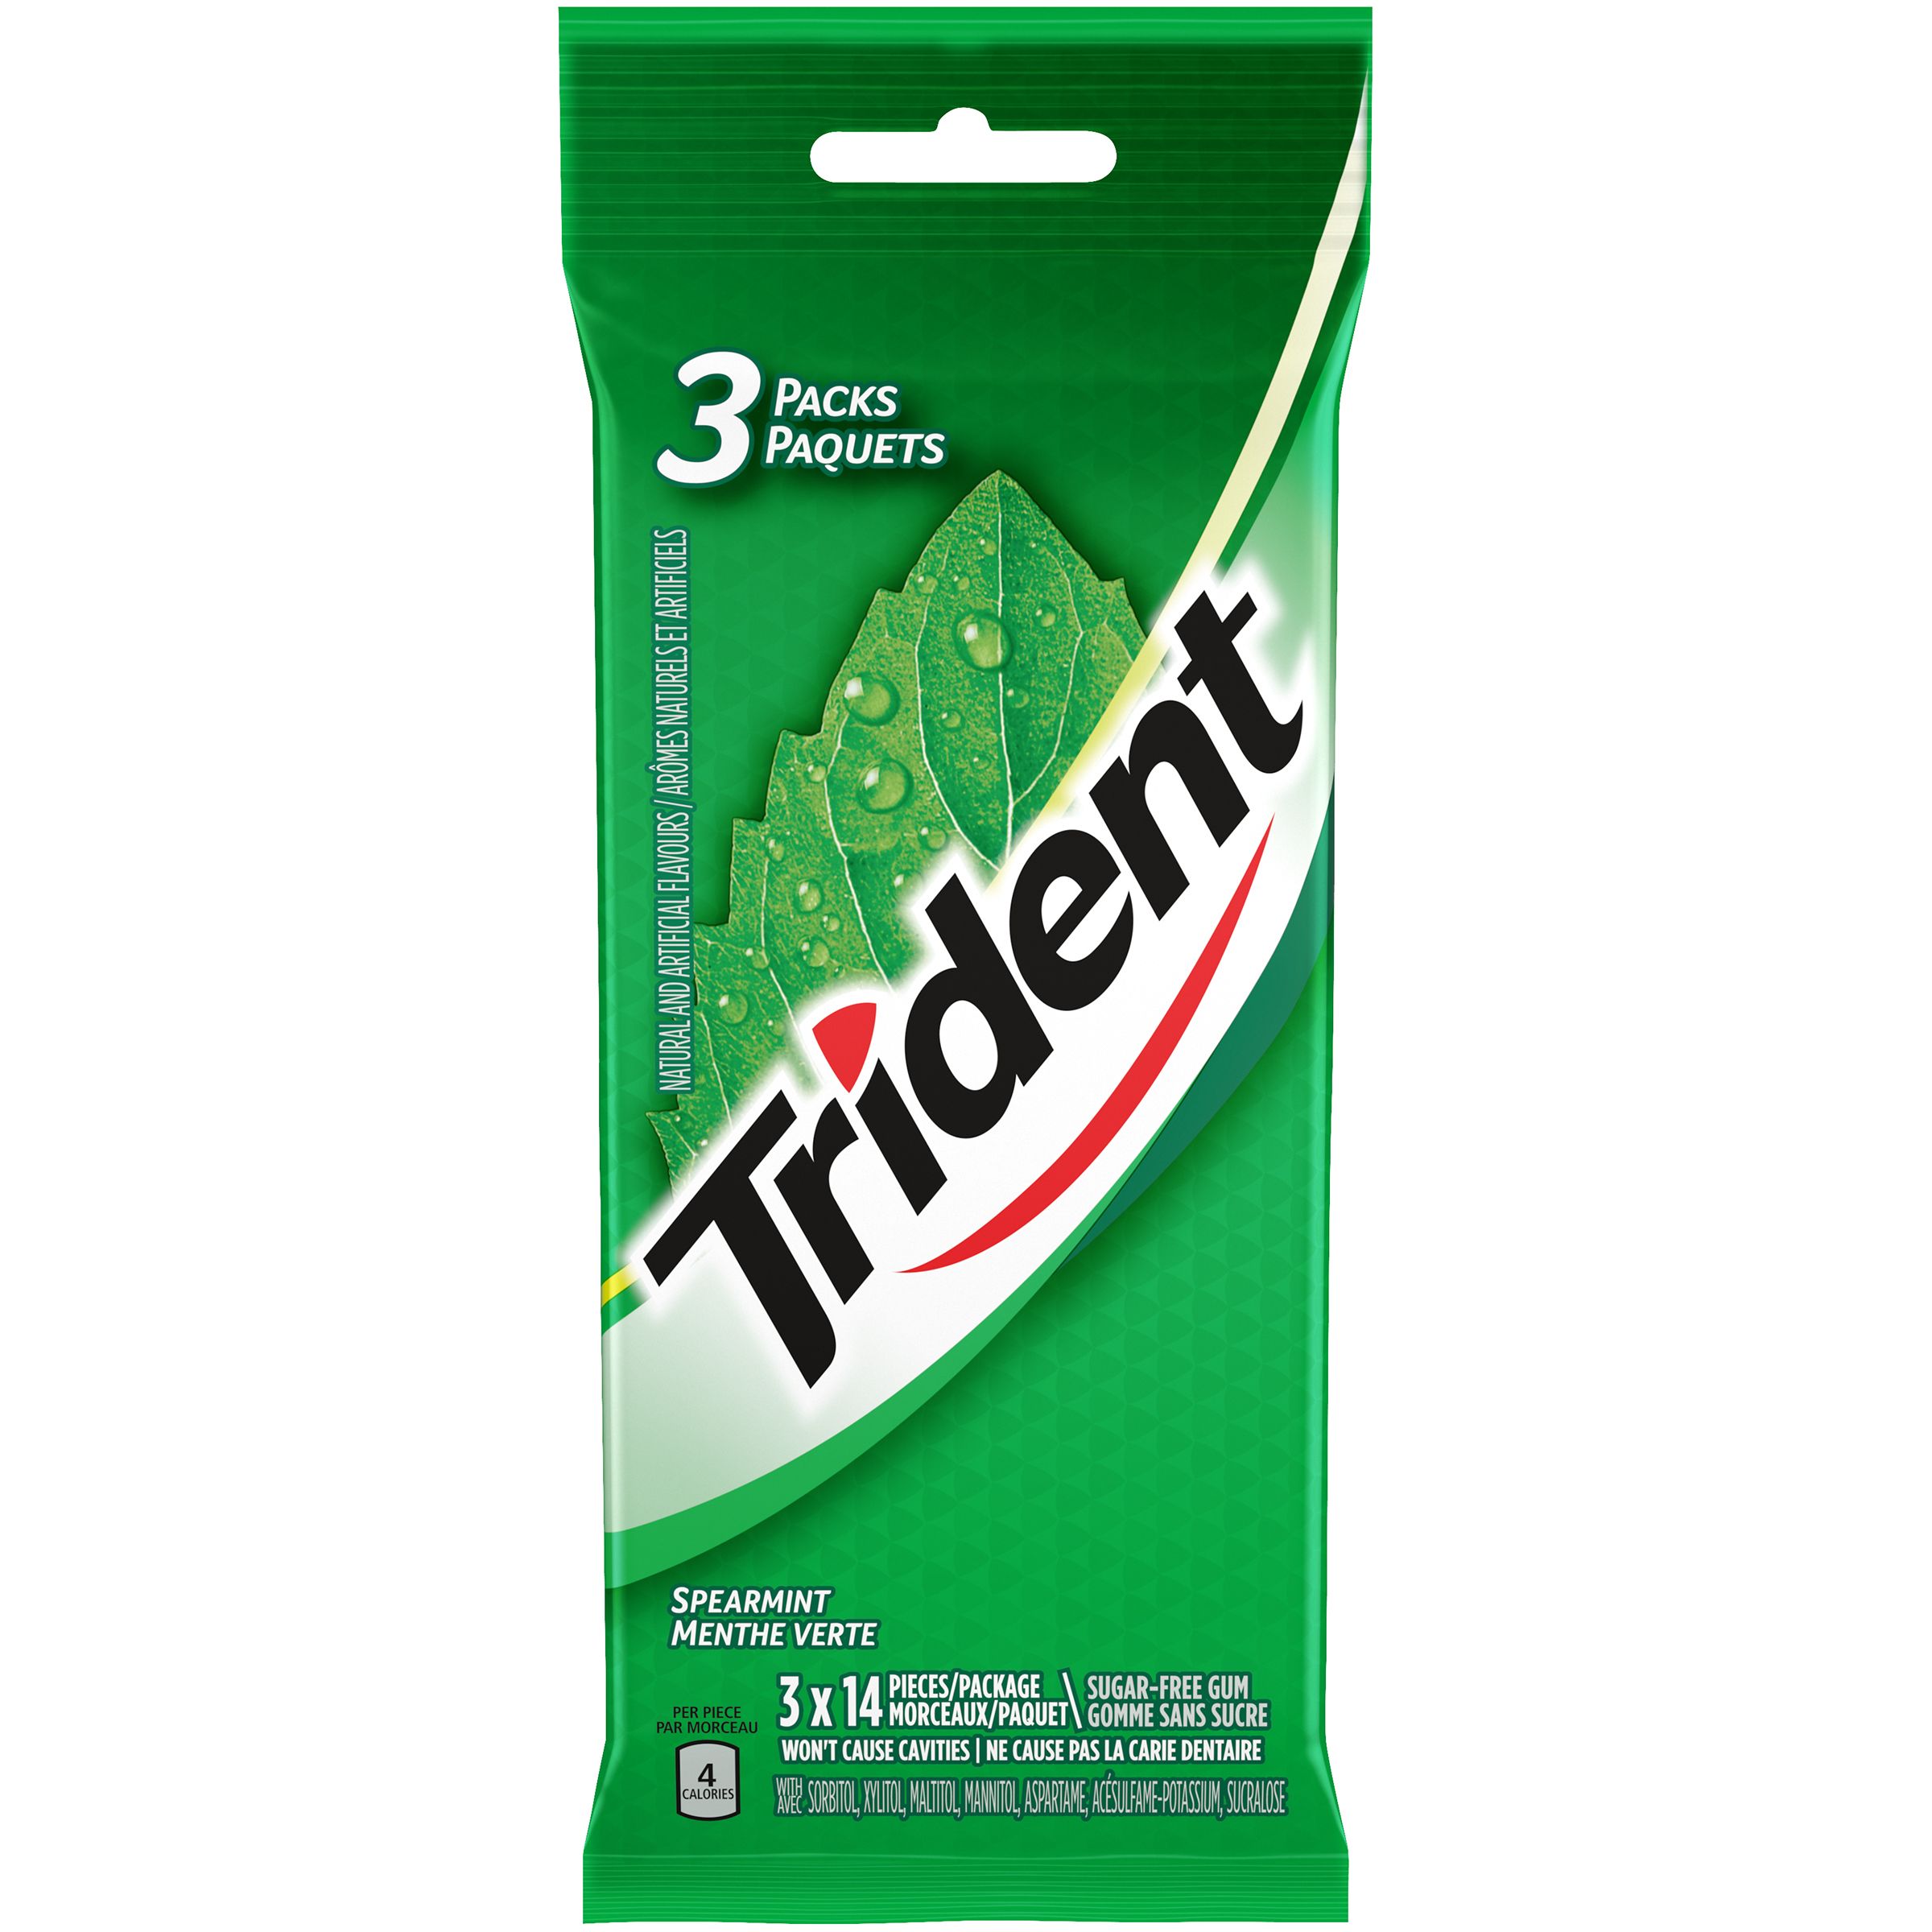 Trident Spearmint Gum 42 Count